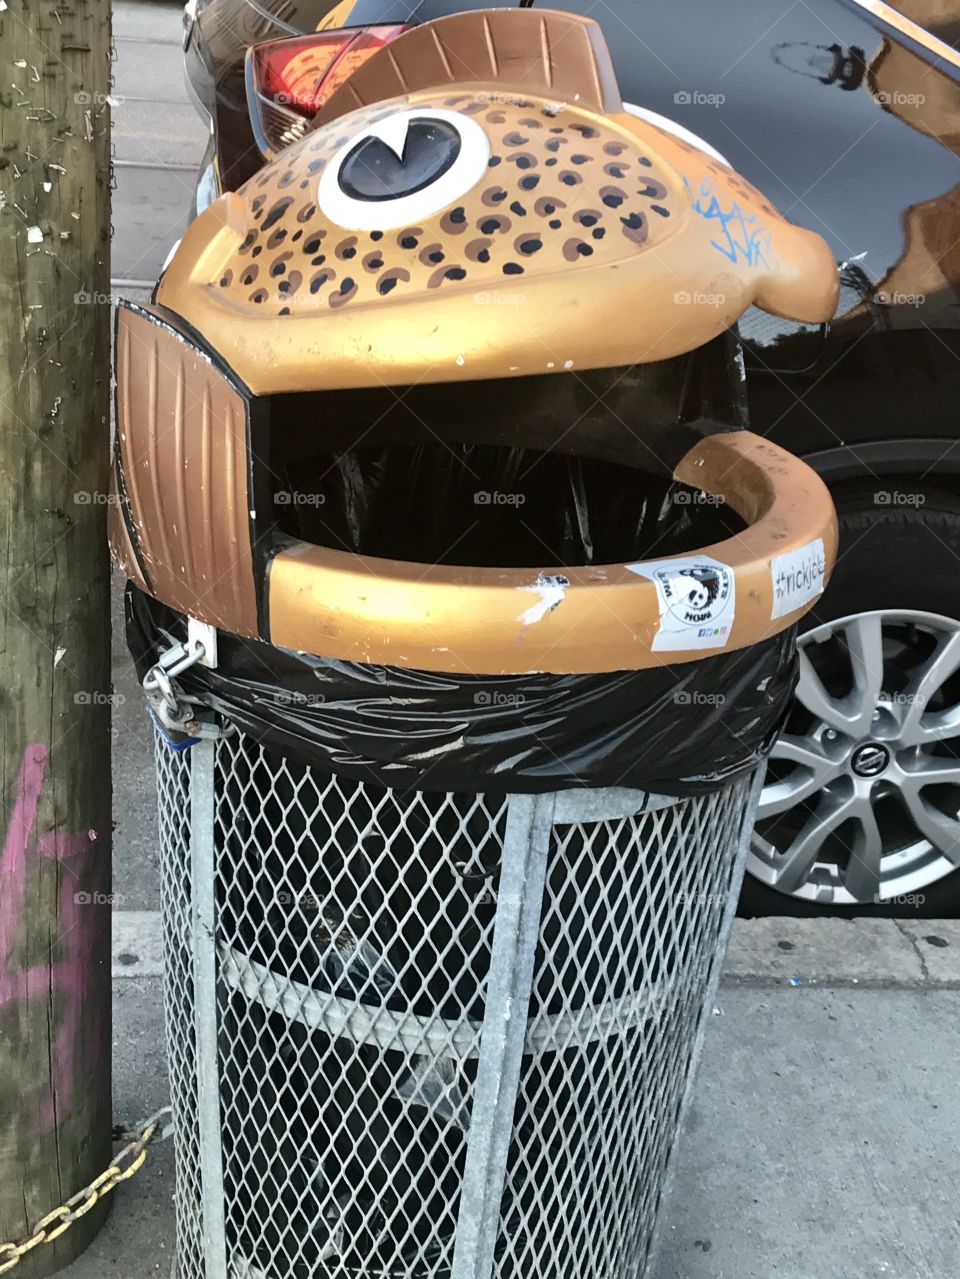 Trash can art